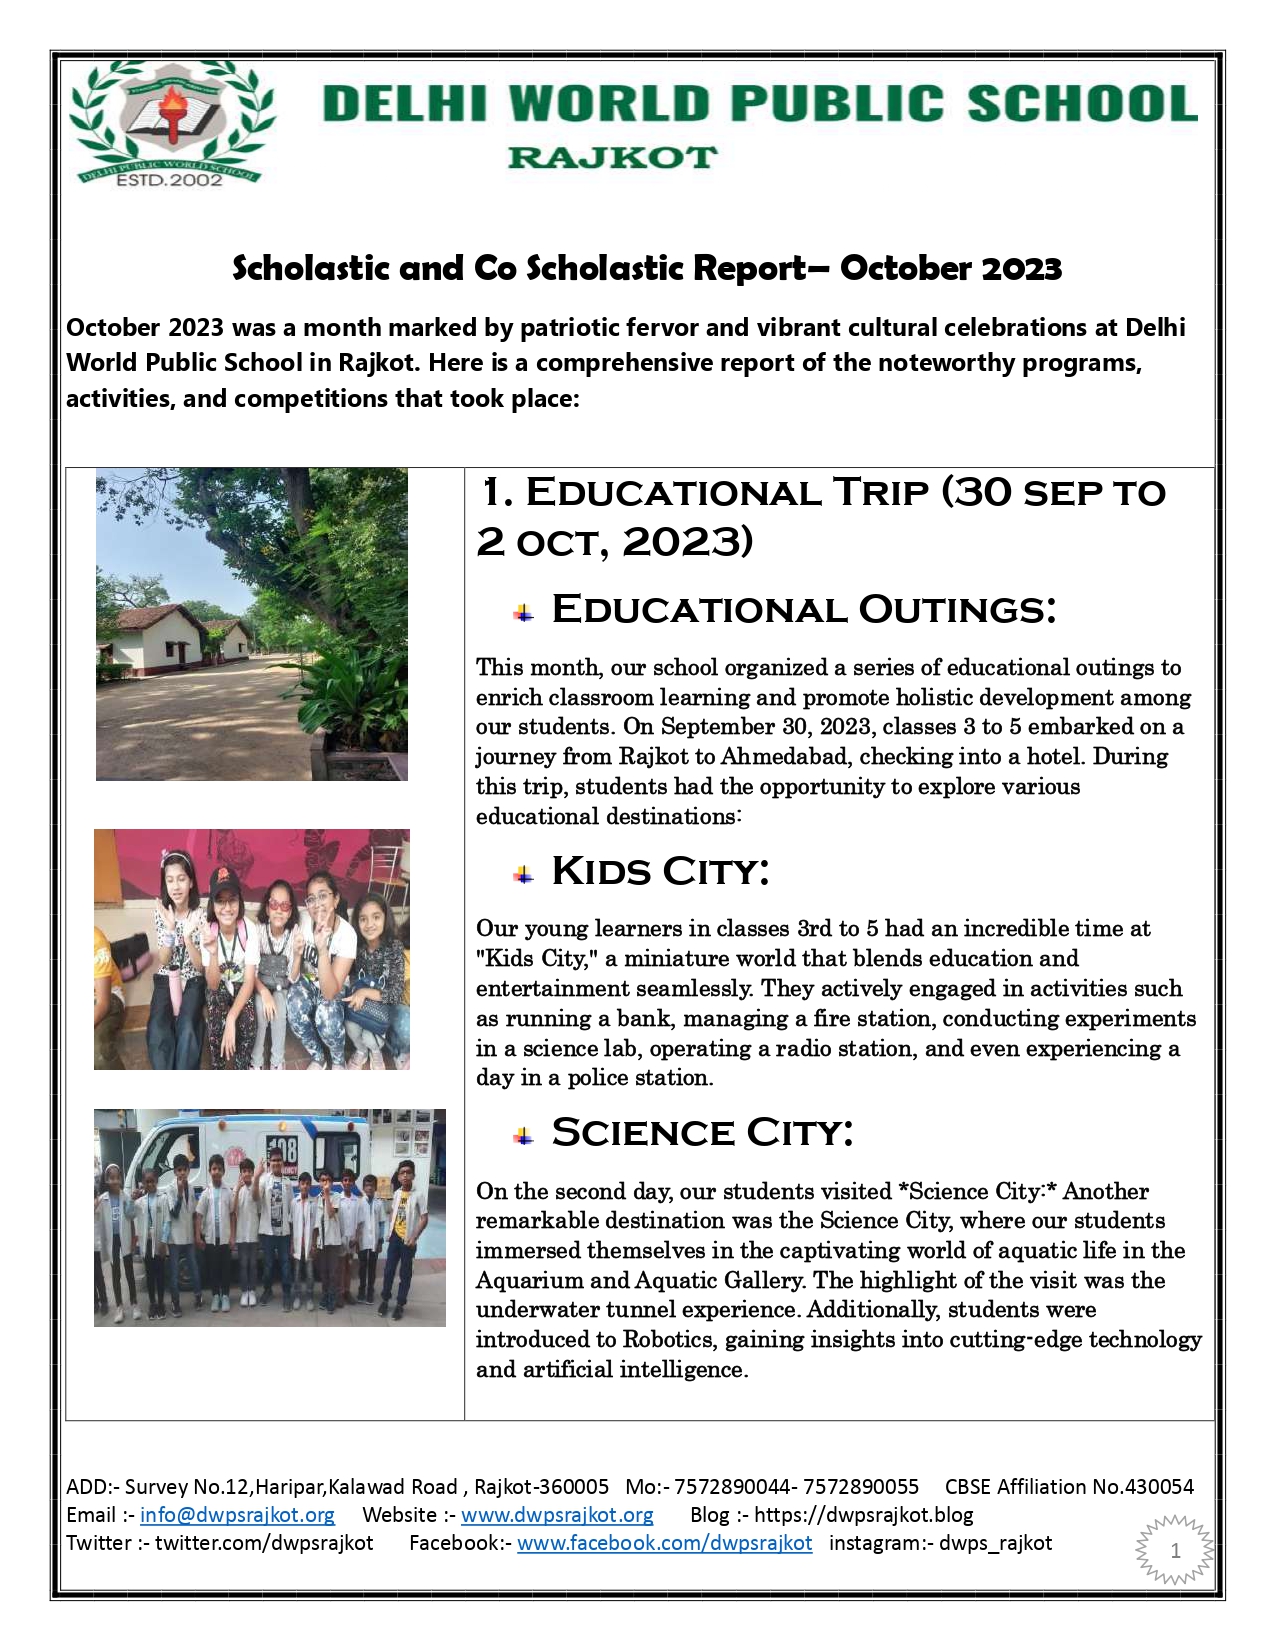 DWPS Rajkot Scholastic and Coscholastic Activities Report- October 2023_page-0001